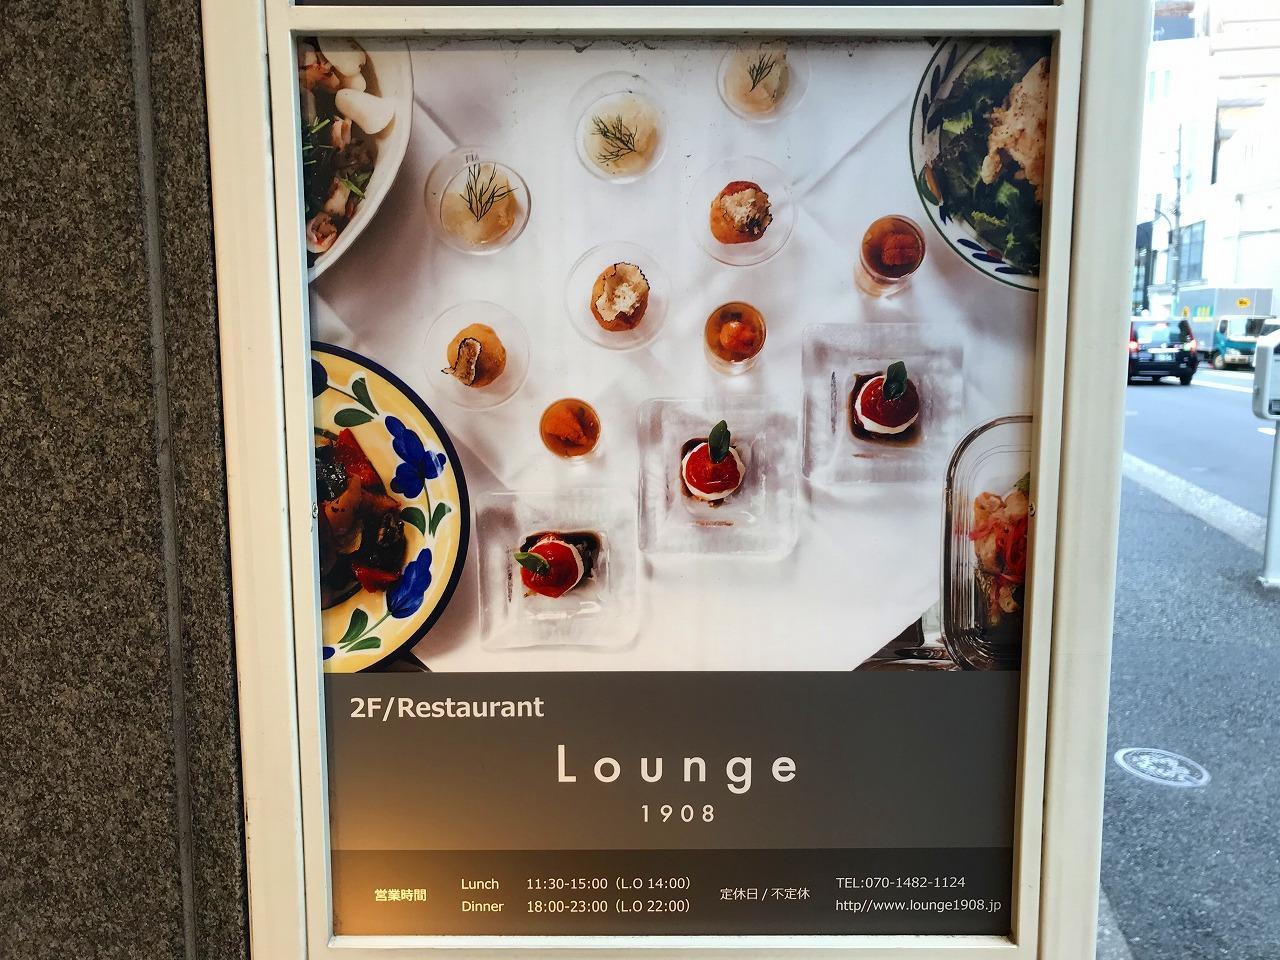 Lounge1908 Restaurant （ラウンジイチキューゼロハチレストラン）